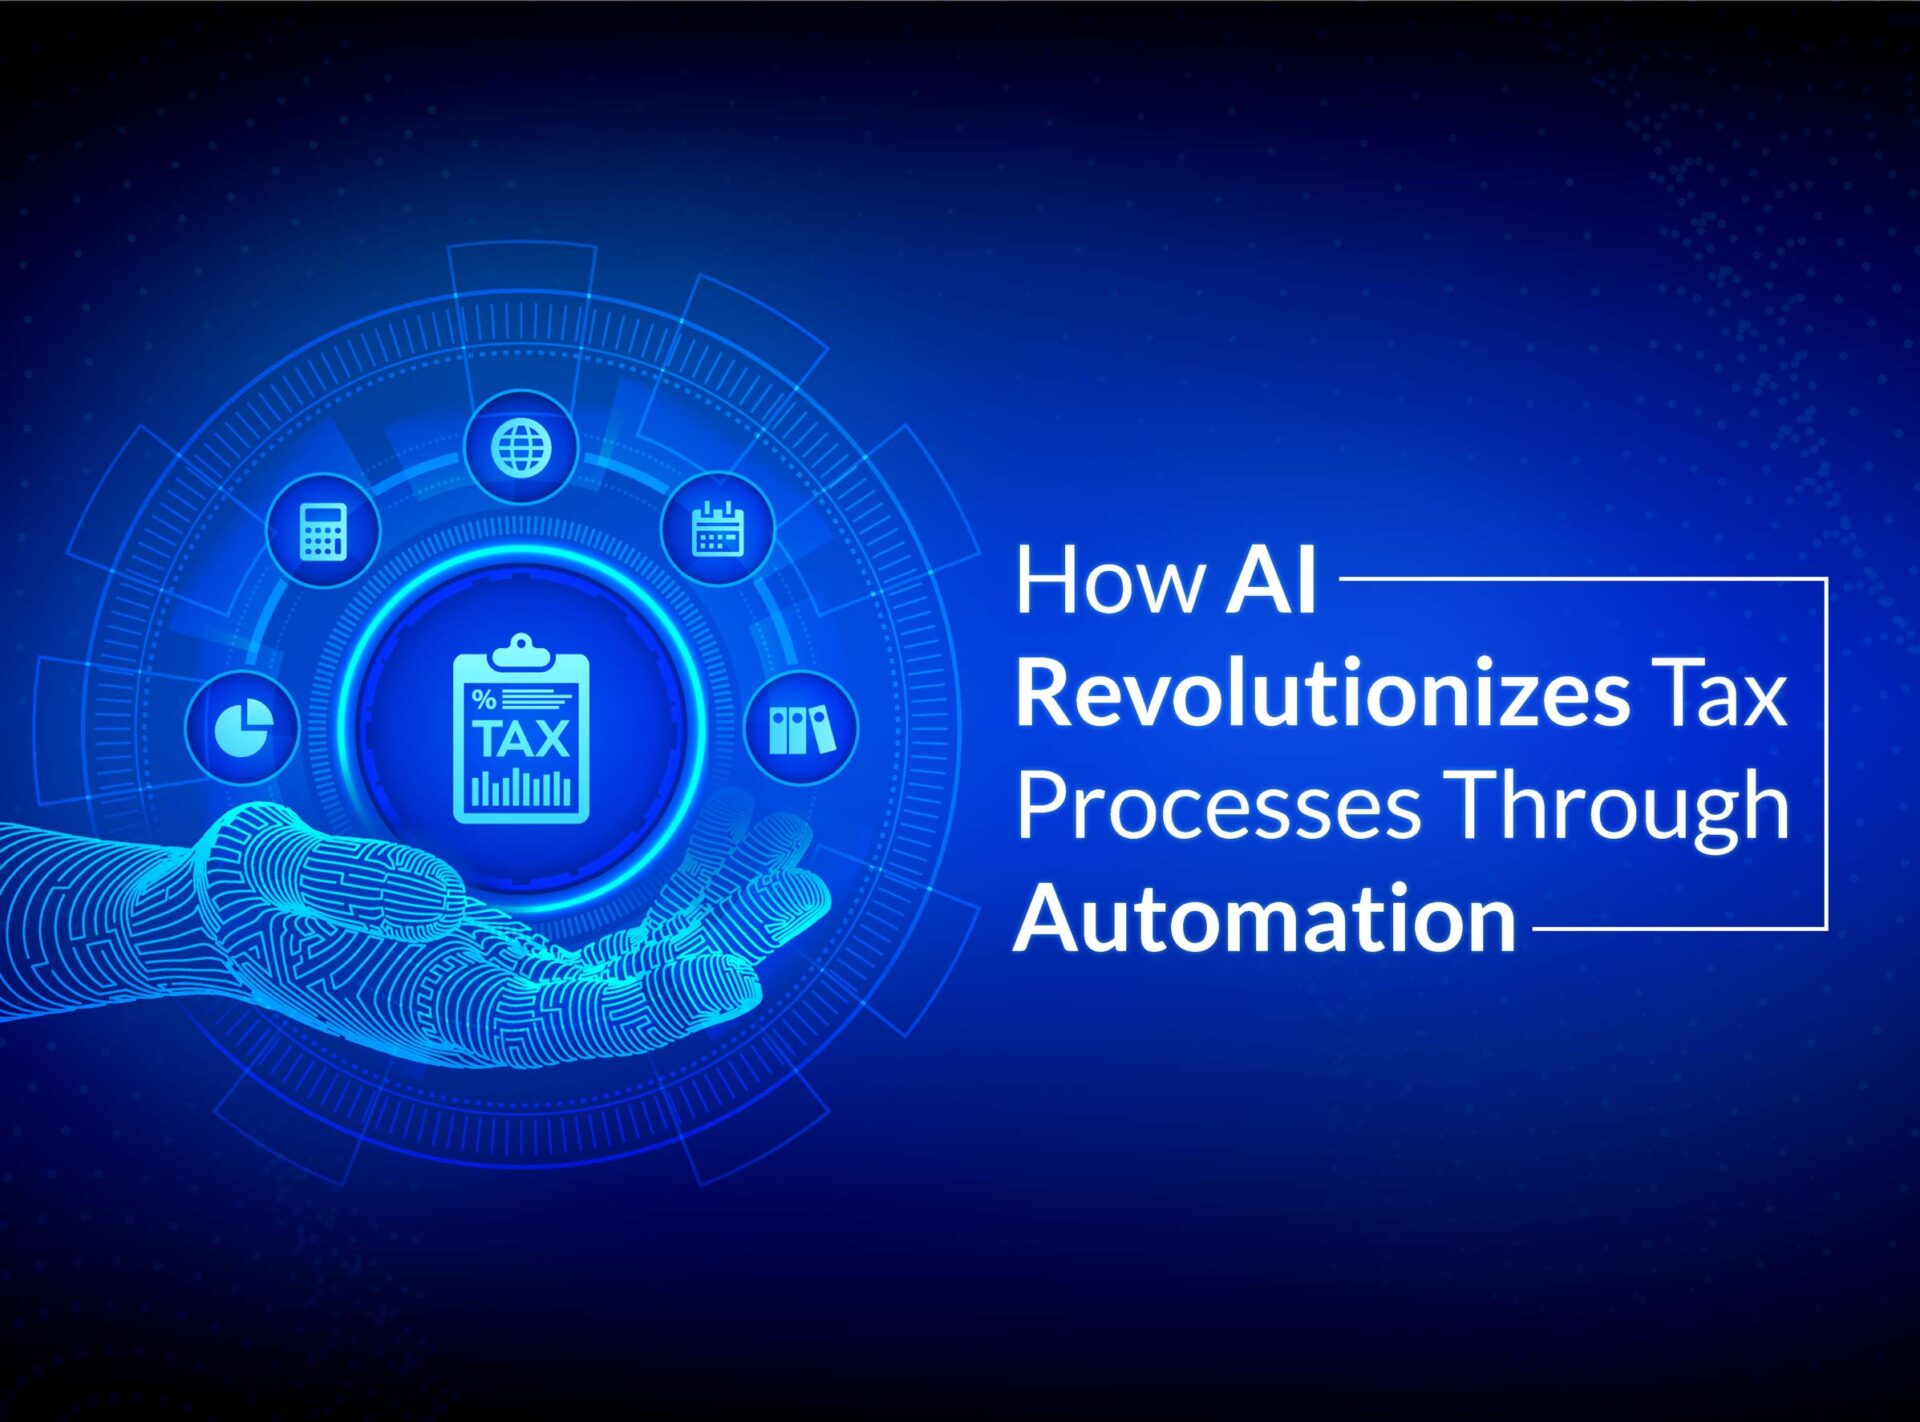 How AI Revolutionizes Tax Processes Through Automation